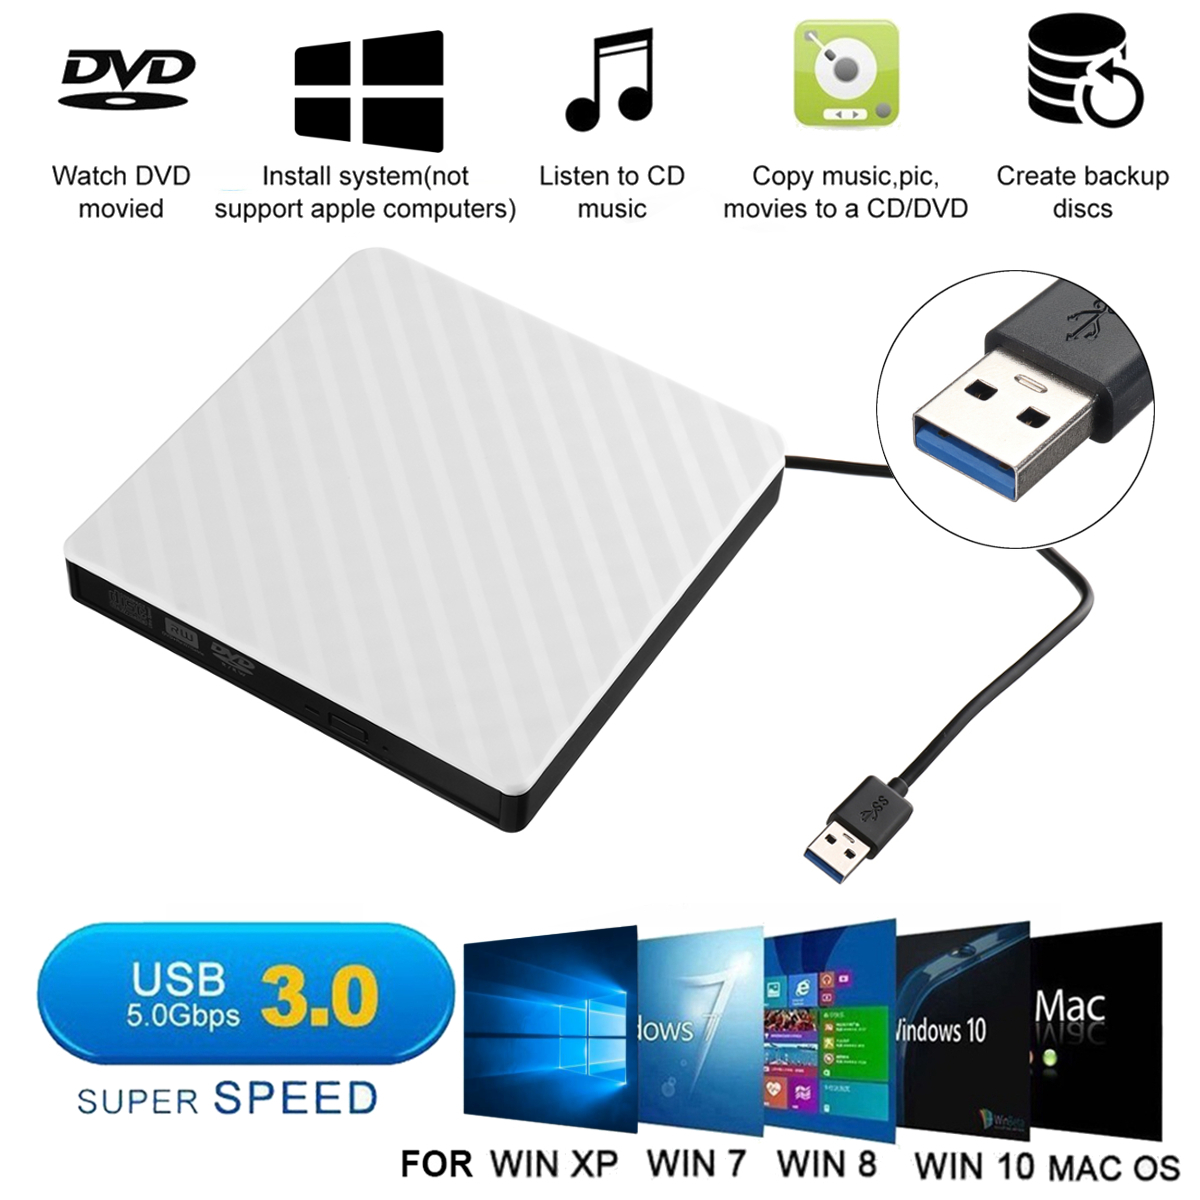 External-USB-30-DVD-RW-CD-Writer-Slim-Carbon-Grain-Drive-Burner-Reader-Player-For-PC-Laptop-Optical--1536013-7